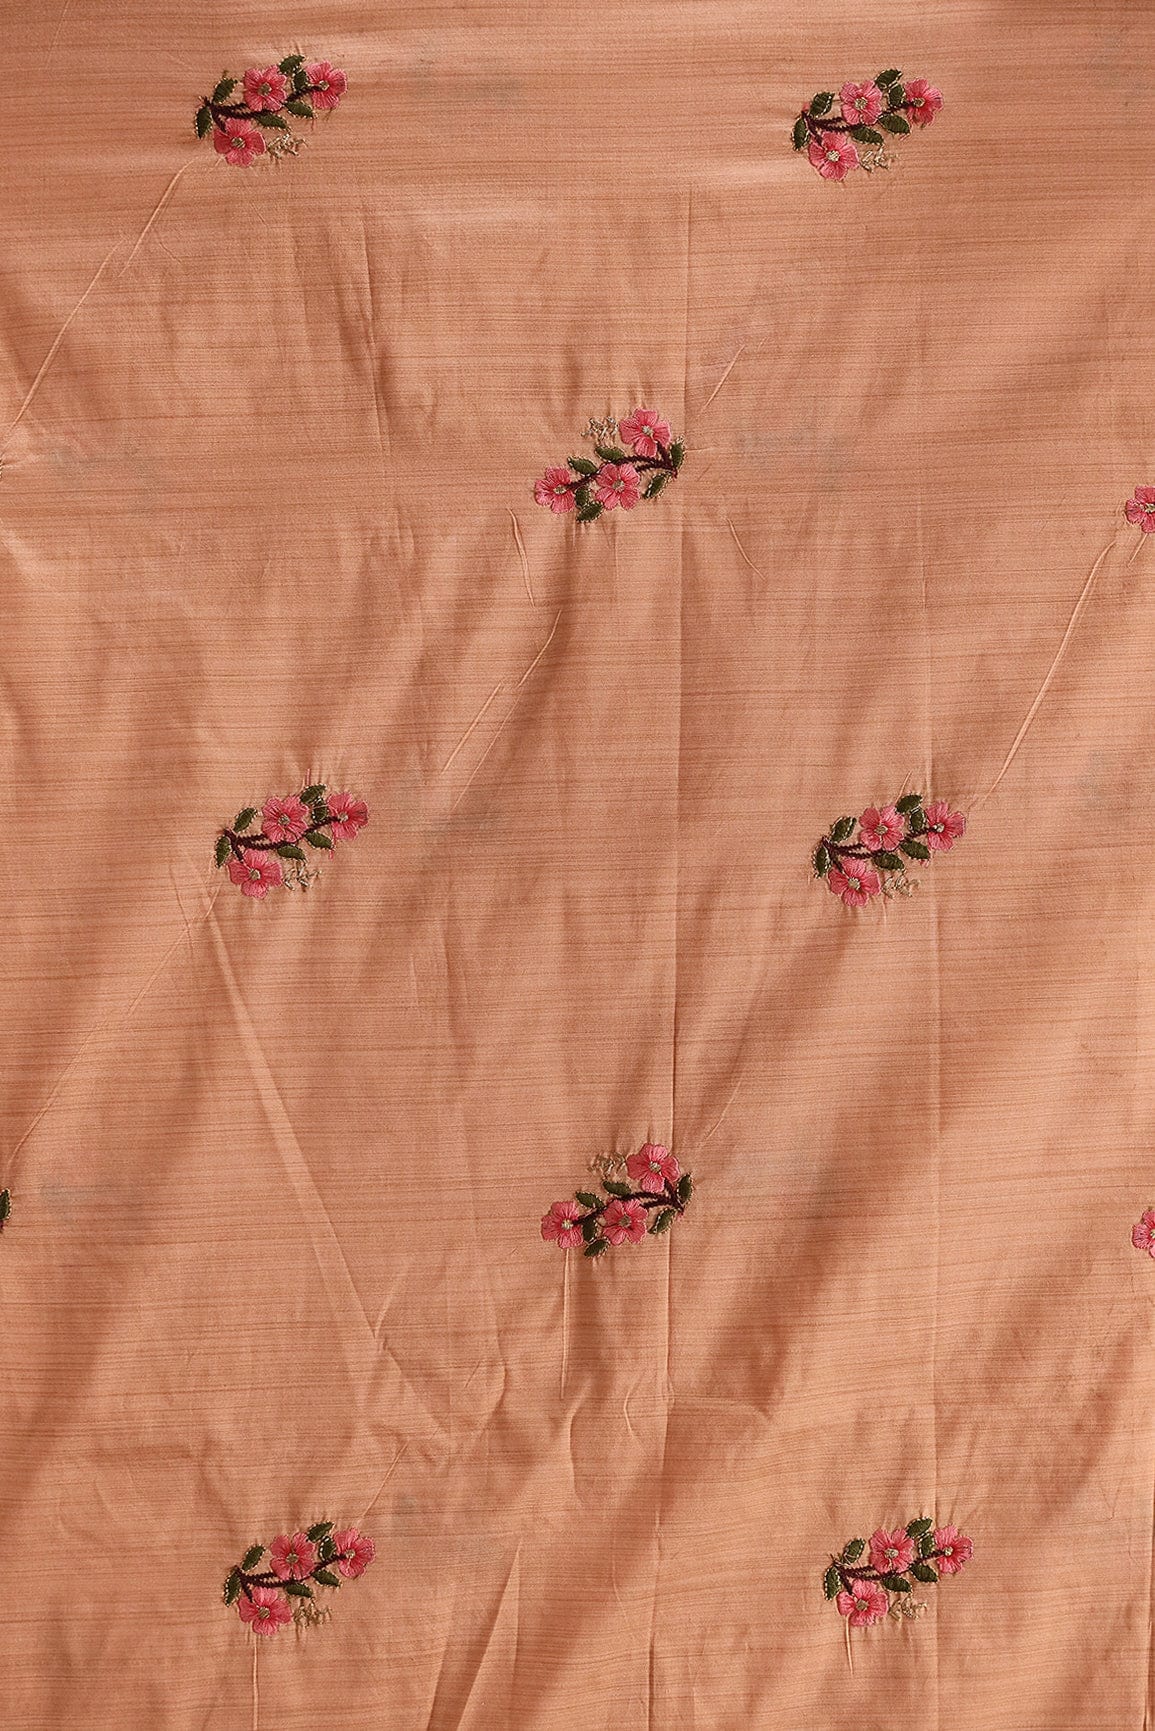 doeraa Embroidery Fabrics 4 Meter Cut Piece Of Multi Color Zari Embroidery On Orange Bamboo Silk Fabric